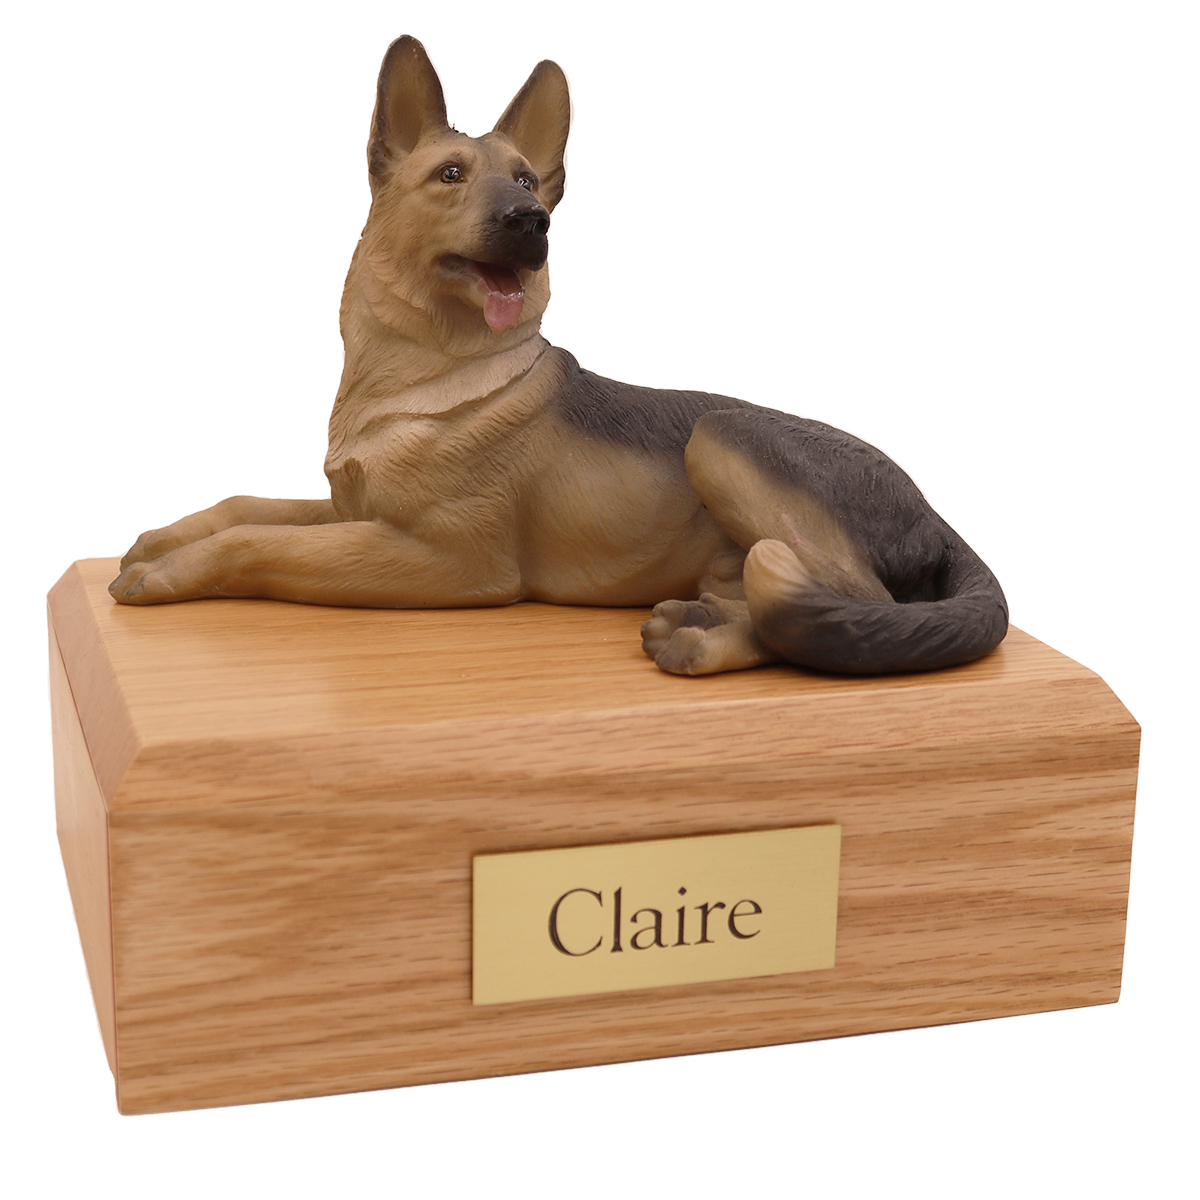 Dog, German Shepherd, Black/Tan - Figurine Urn